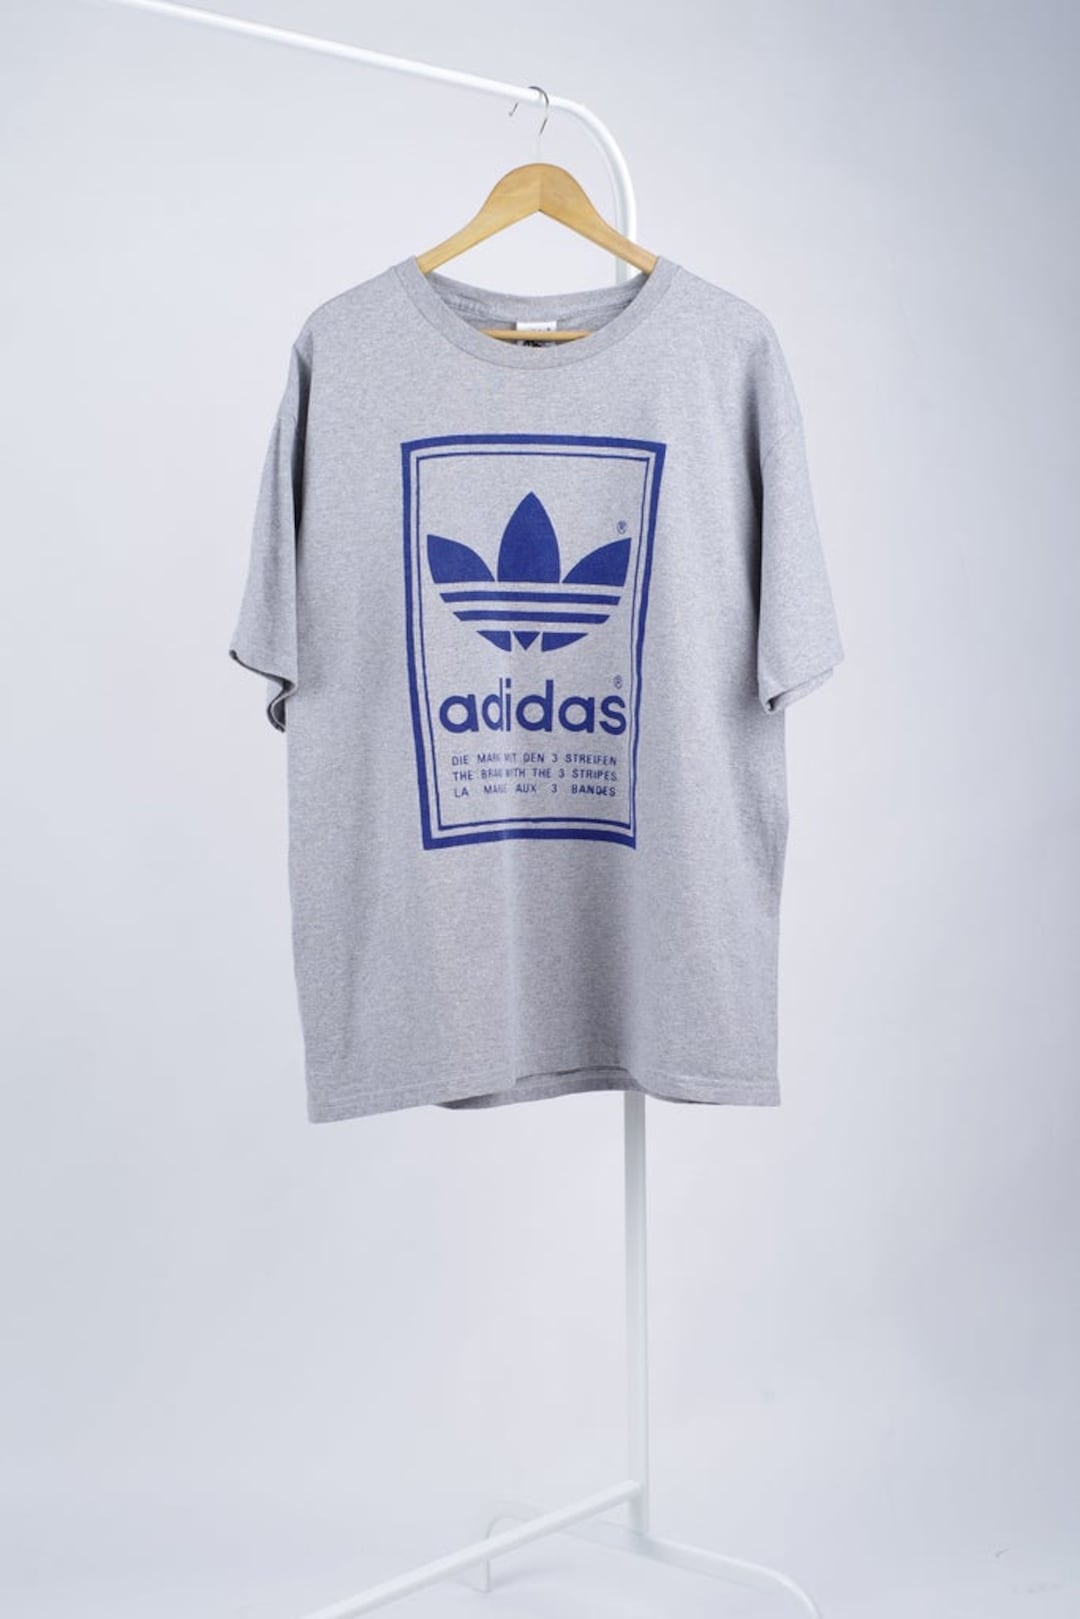 Adidas Originals Vintage Made T-shirt, Size Gray L Men\'s Etsy USA - in